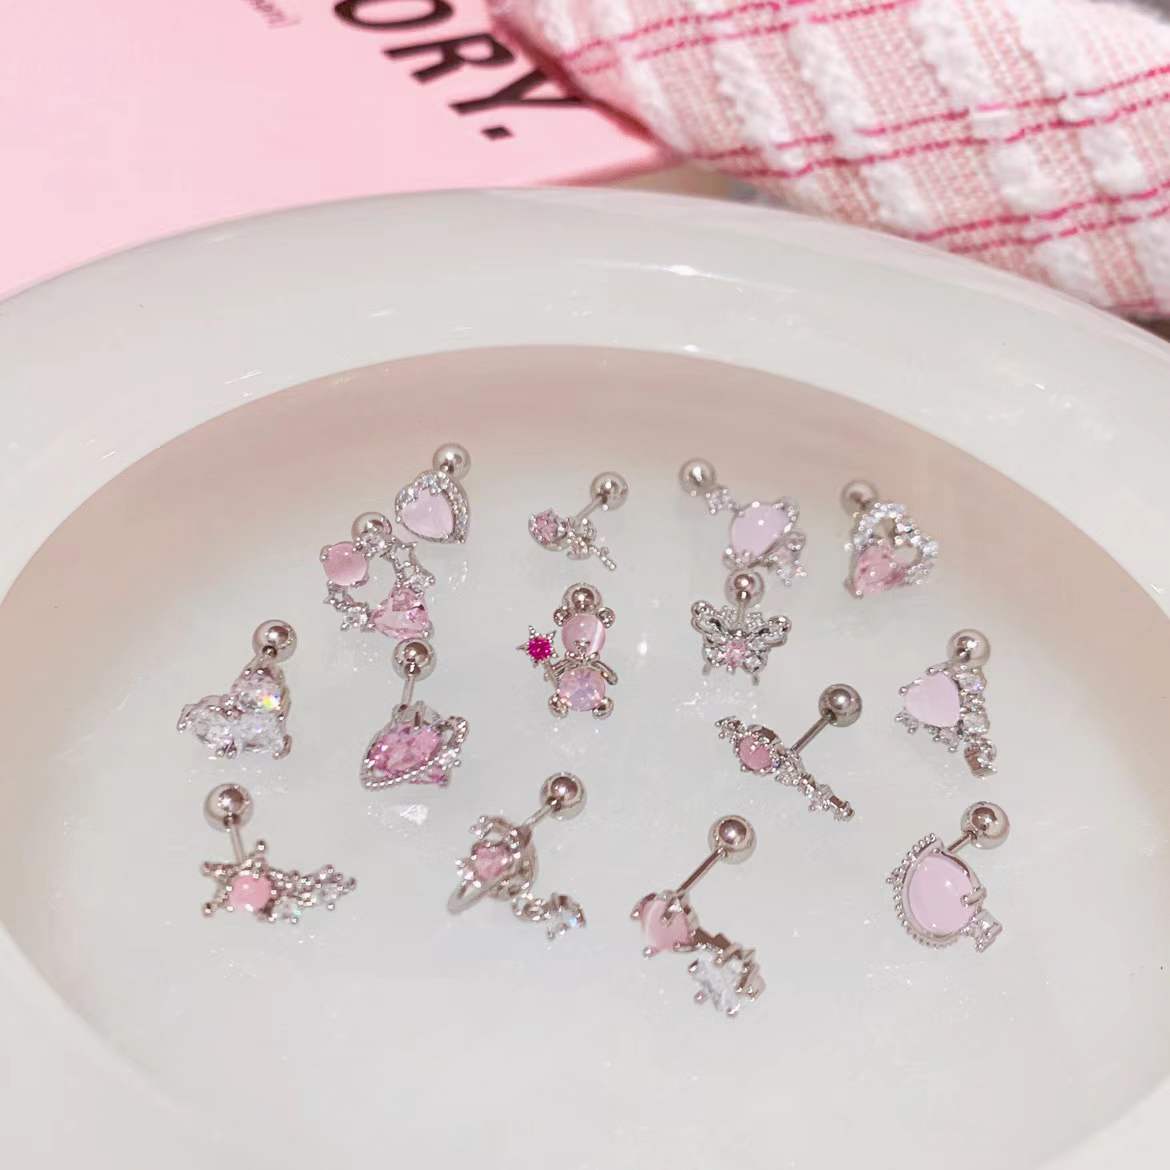 Amazing Awsome Bear Cute Pink Sweet Girls 0.8mm Piercing Earring New (1 Piece)